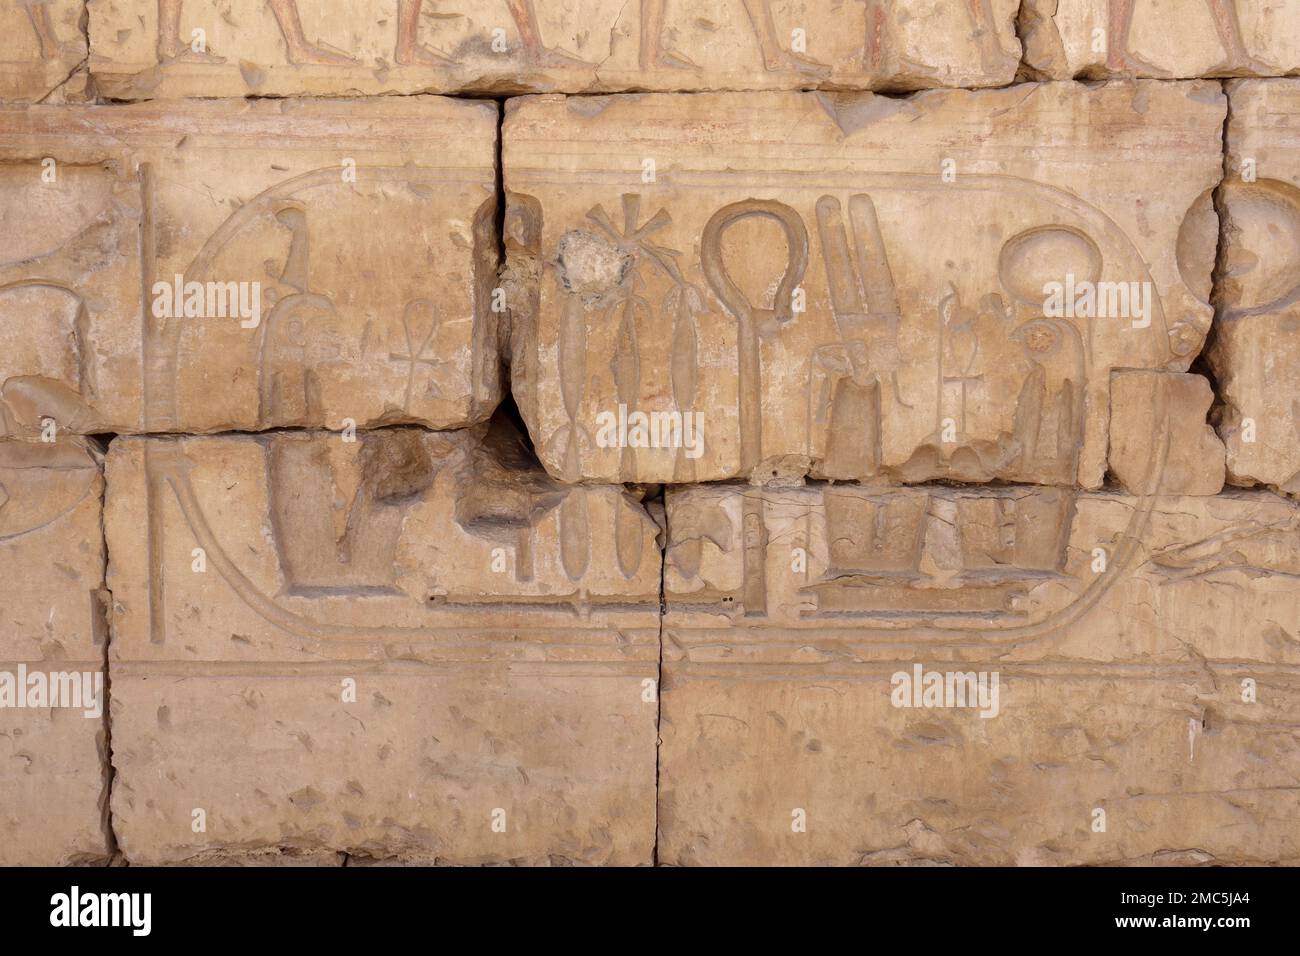 El Templo de Ramsés II, cerca del templo de Seti I en Abydos, Egipto Foto de stock